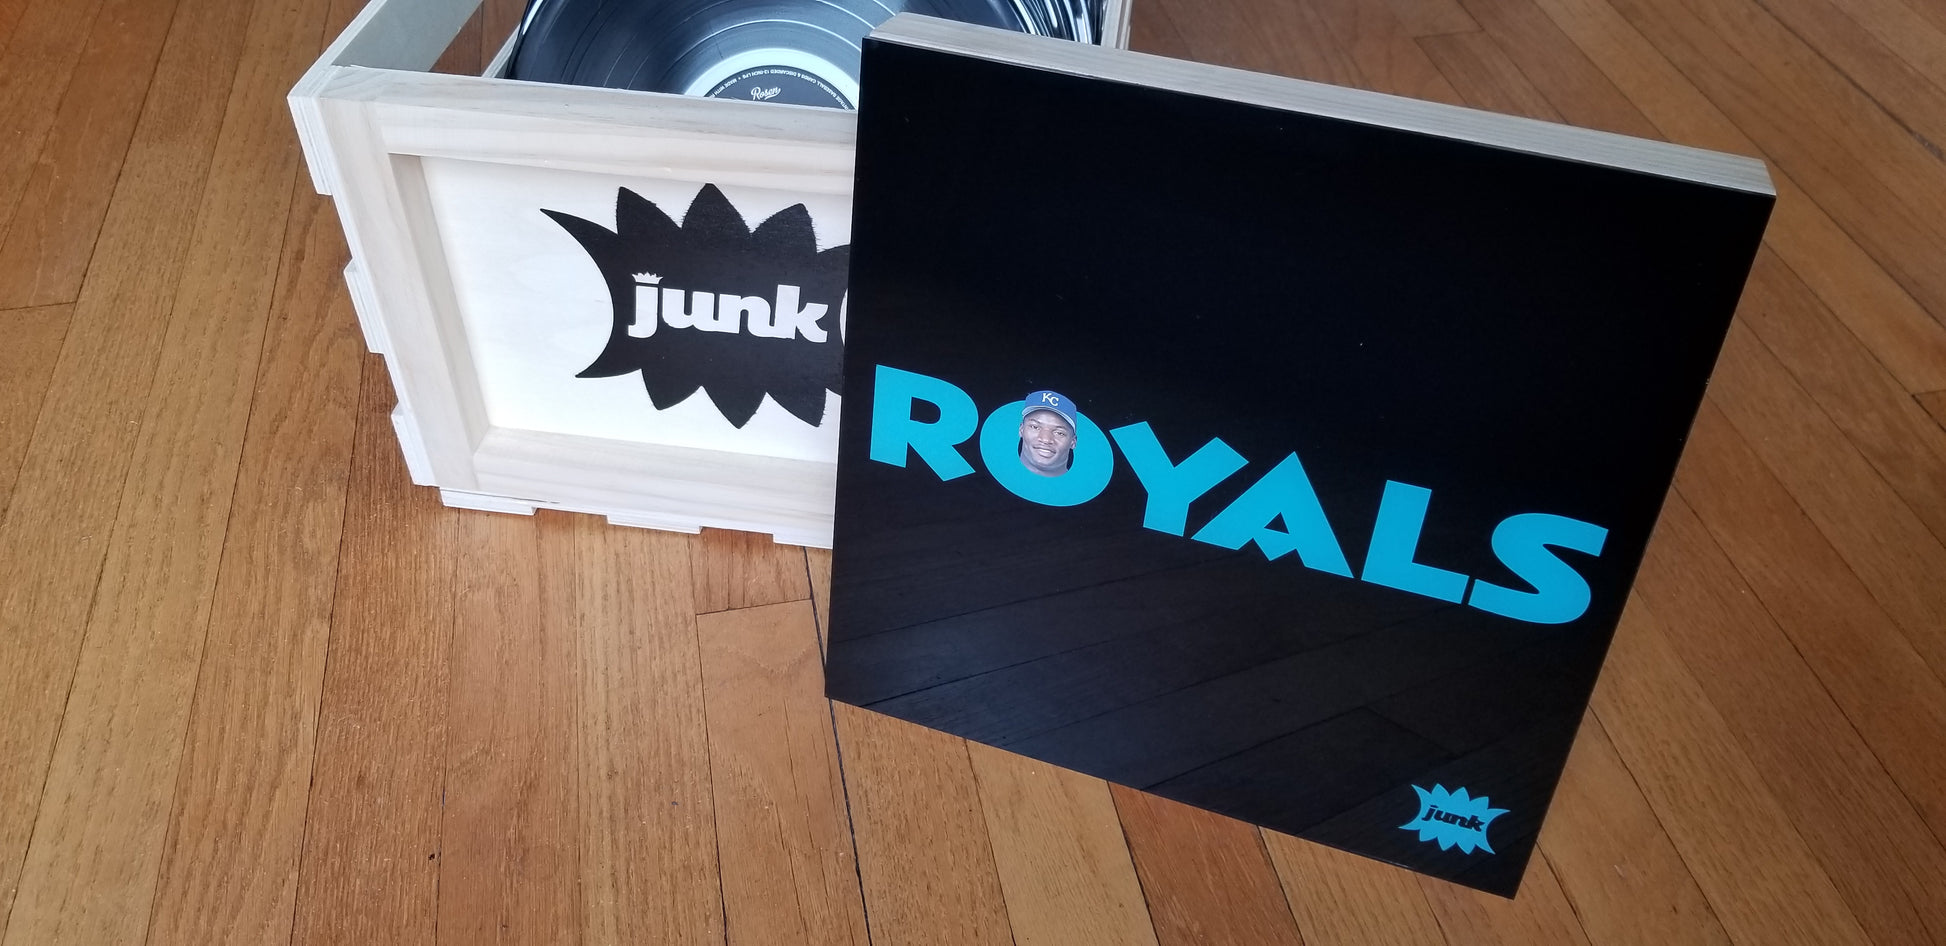 Junk Wax Records by Matt Rosen - 1986 Topps Traded Bo Jackson Album Cover